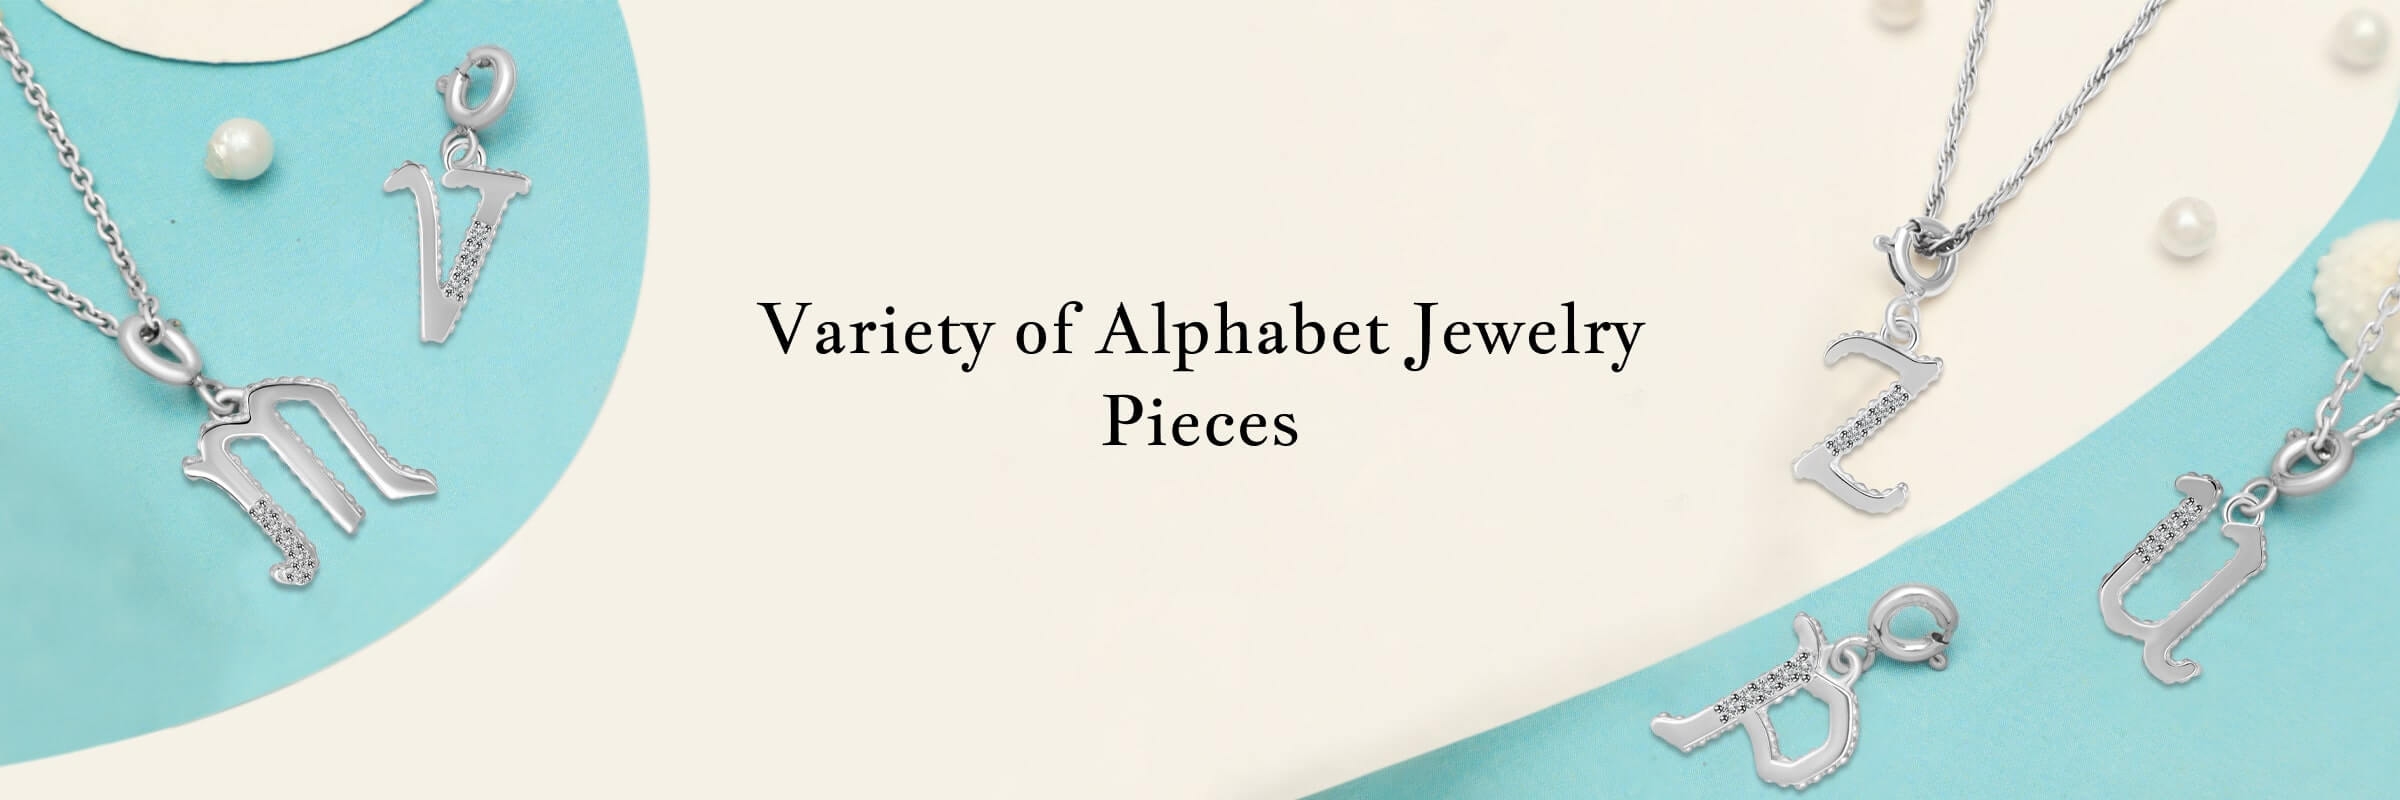 Assortment of Alphabet Jewelry